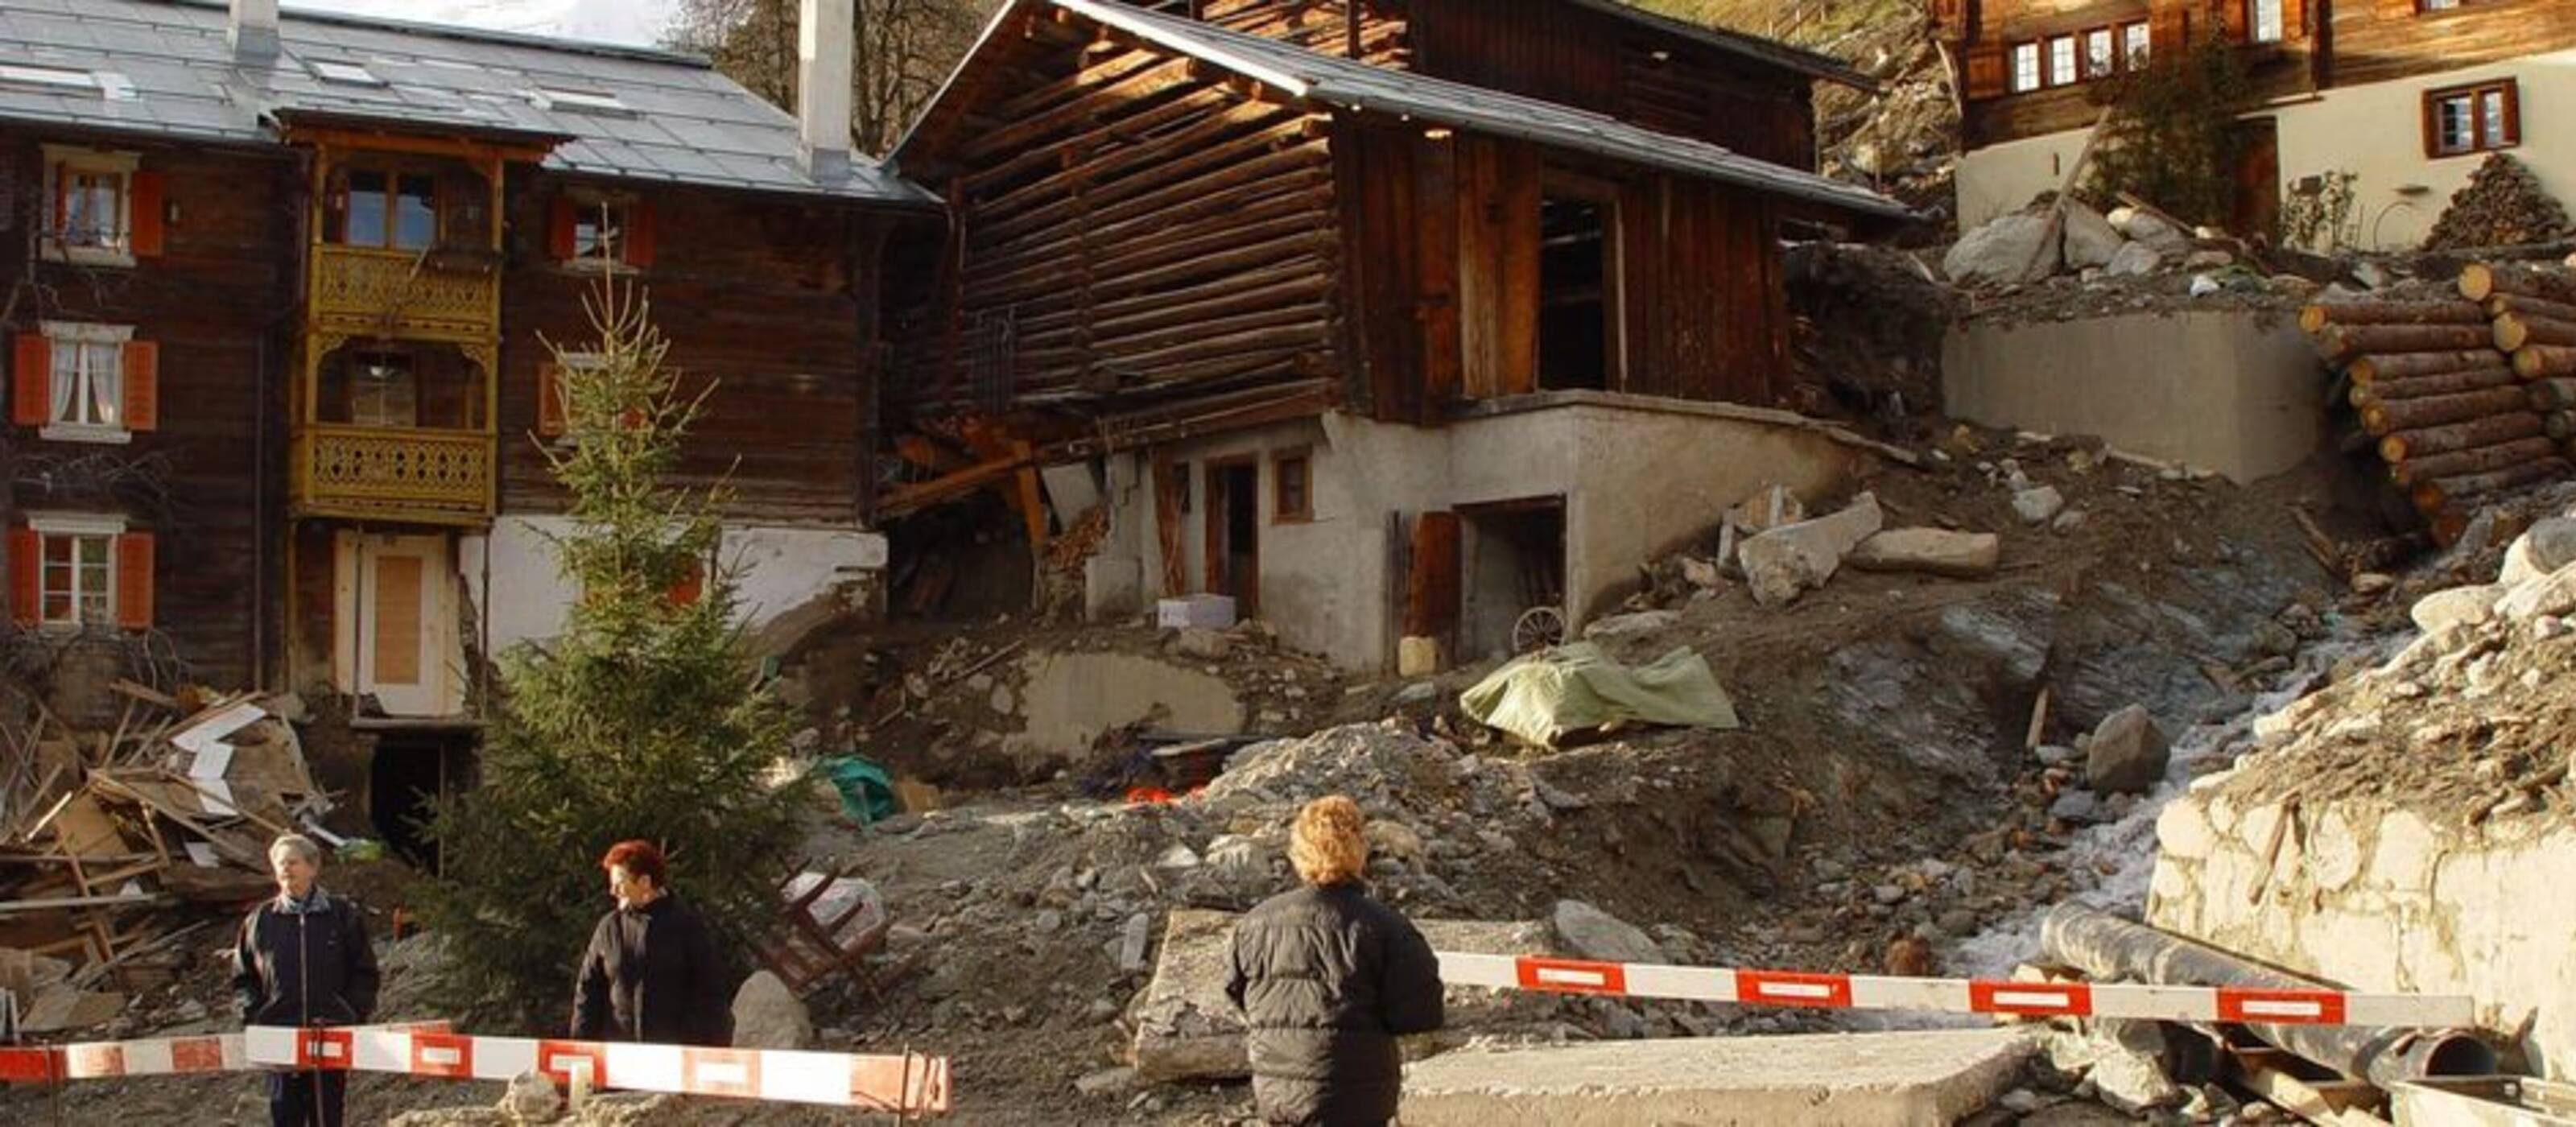 Aide en cas de catastrophe en Suisse